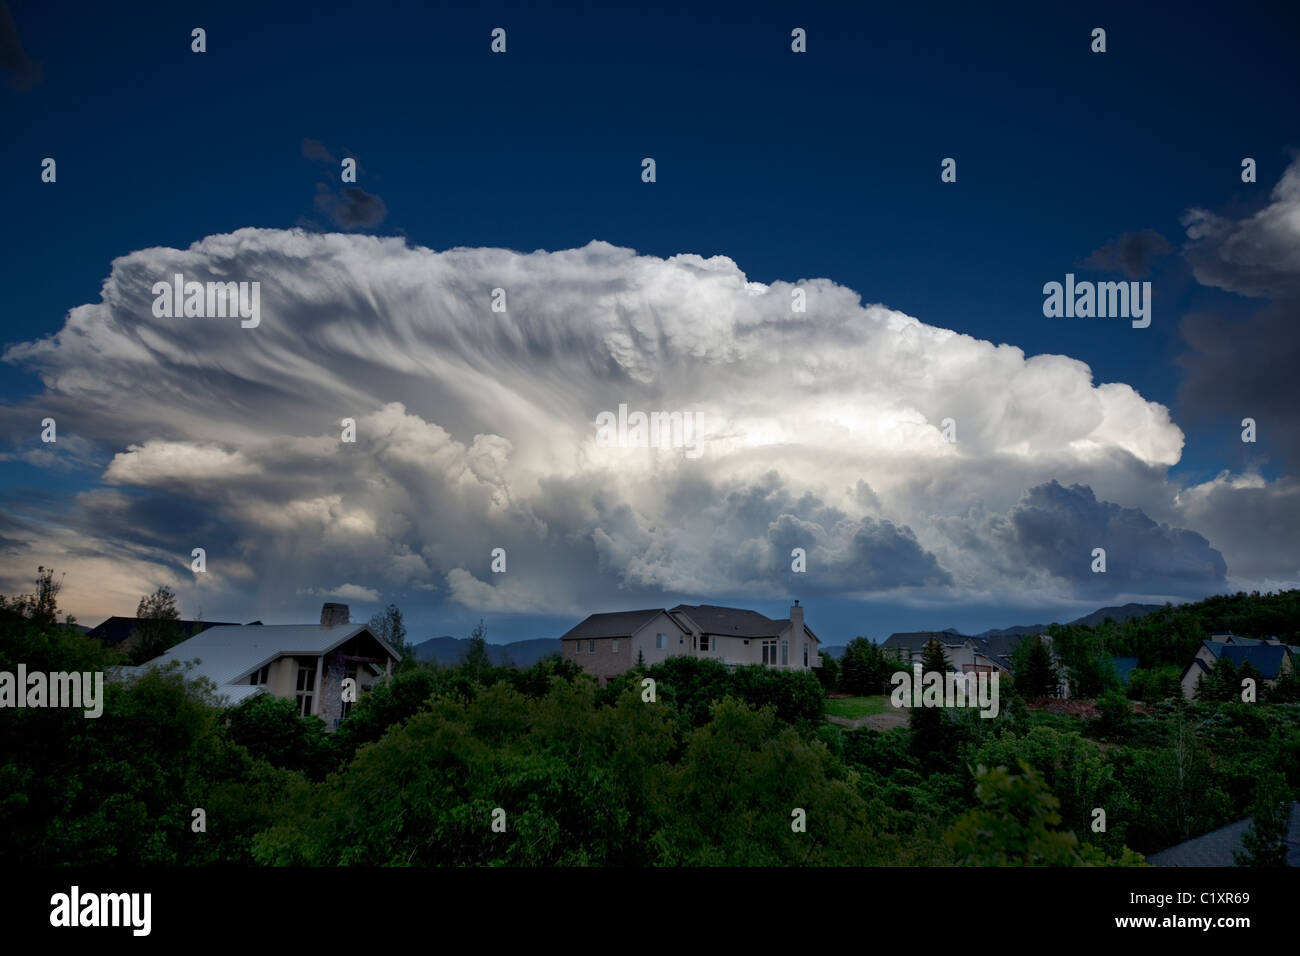 A massive summer cumulonimbus cloud over an exurban neighborhood in the Wasatch Range, Utah. Stock Photo